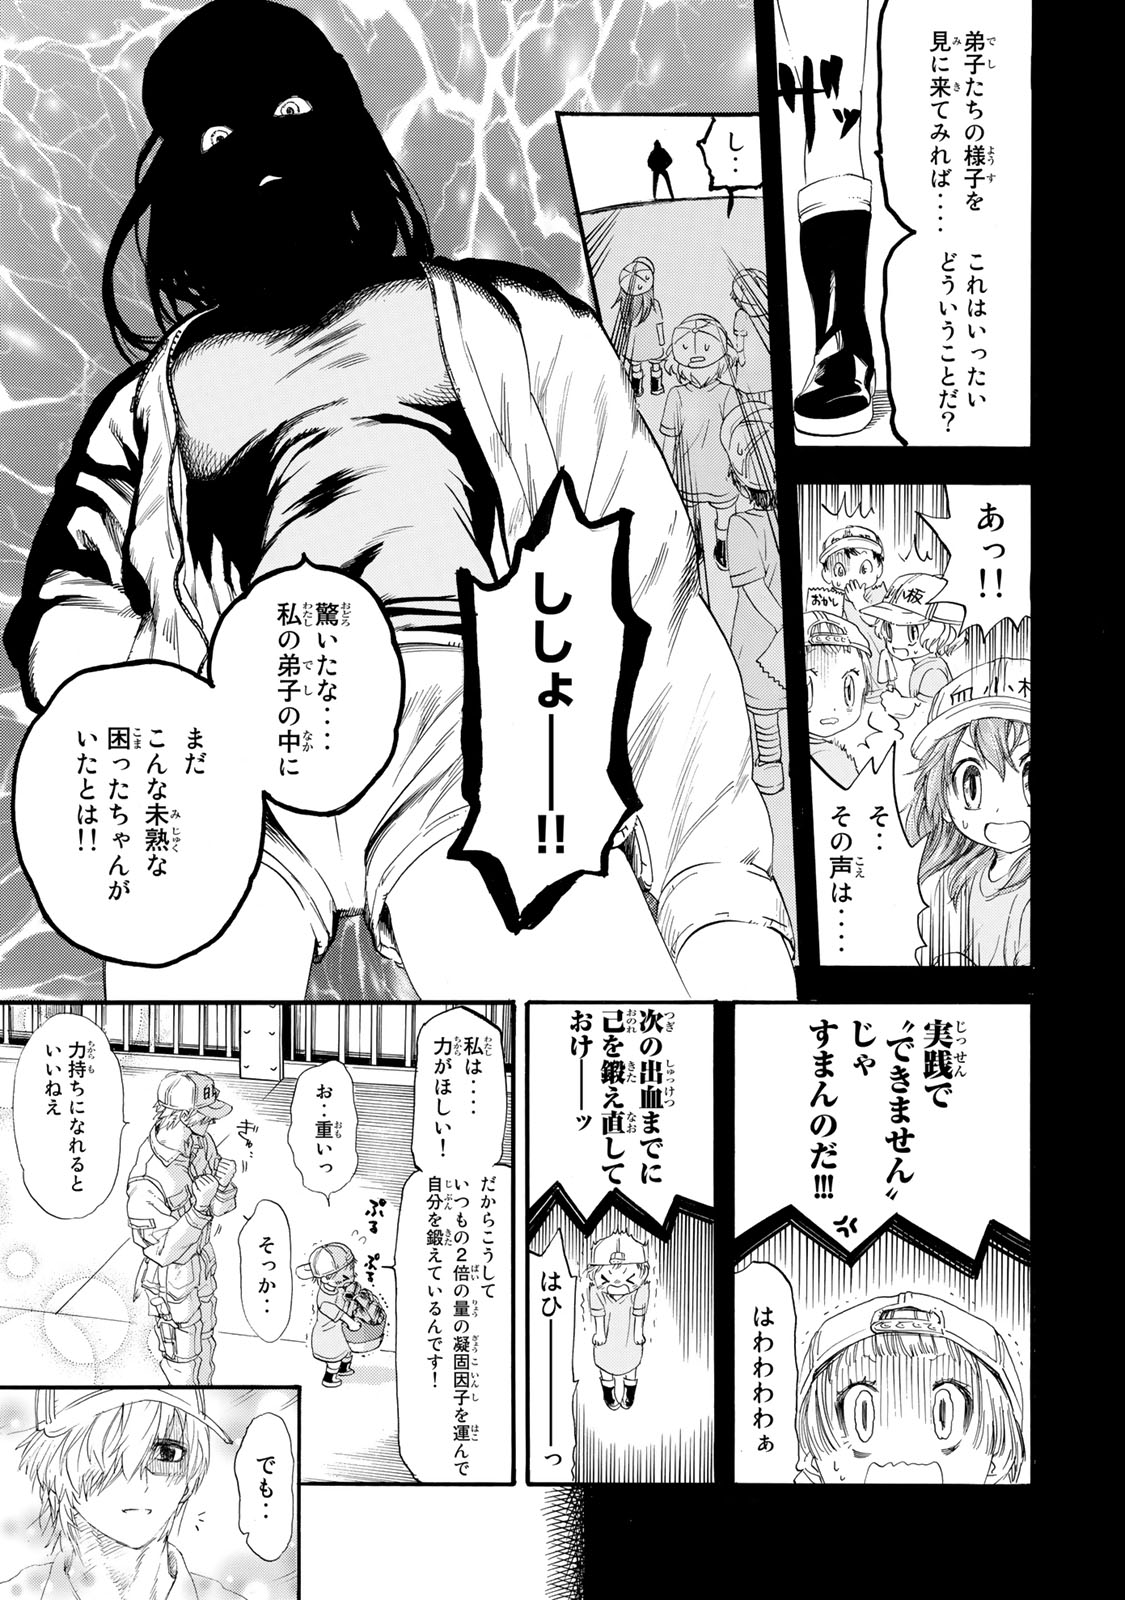 Hataraku Saibou - Chapter 26 - Page 13